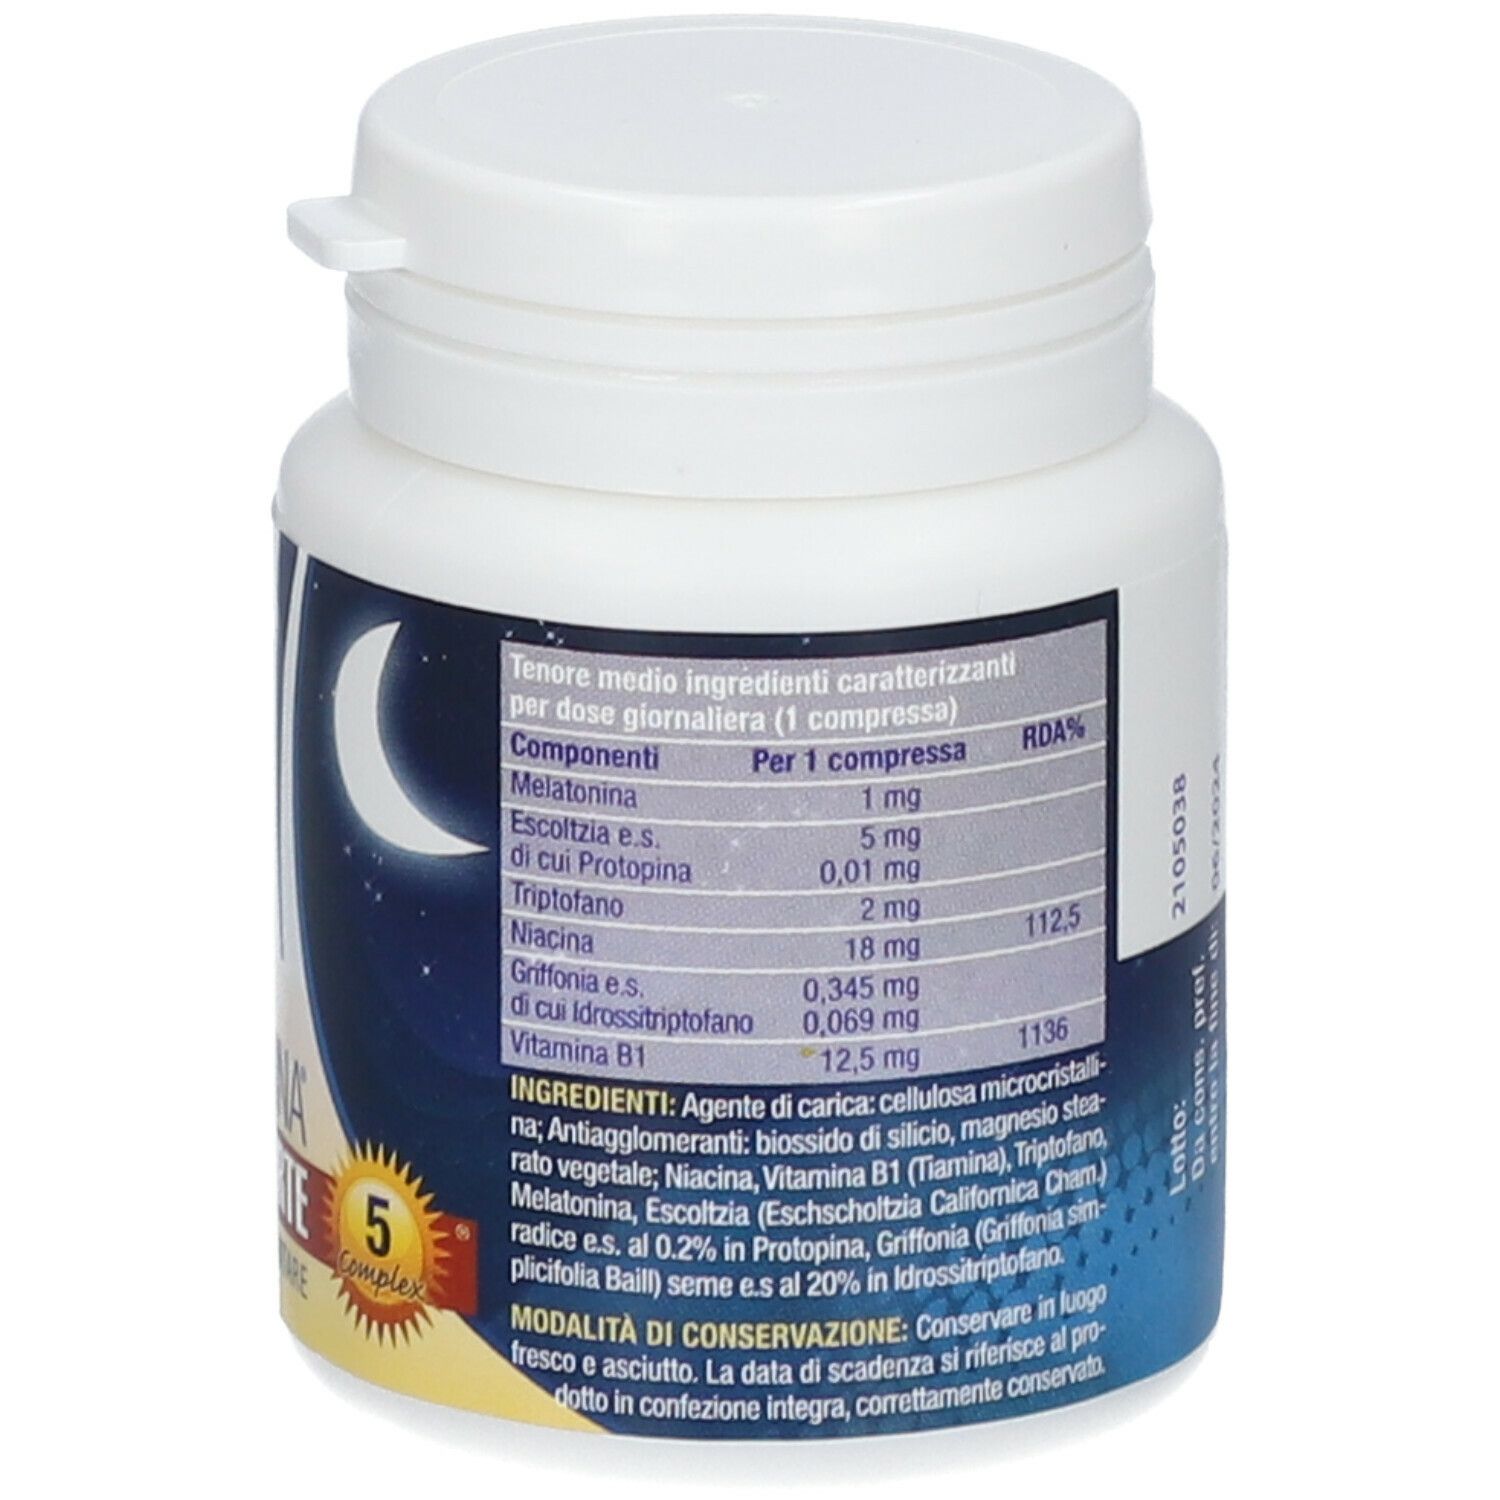 Melatonina® Act - Forte 5 Complex